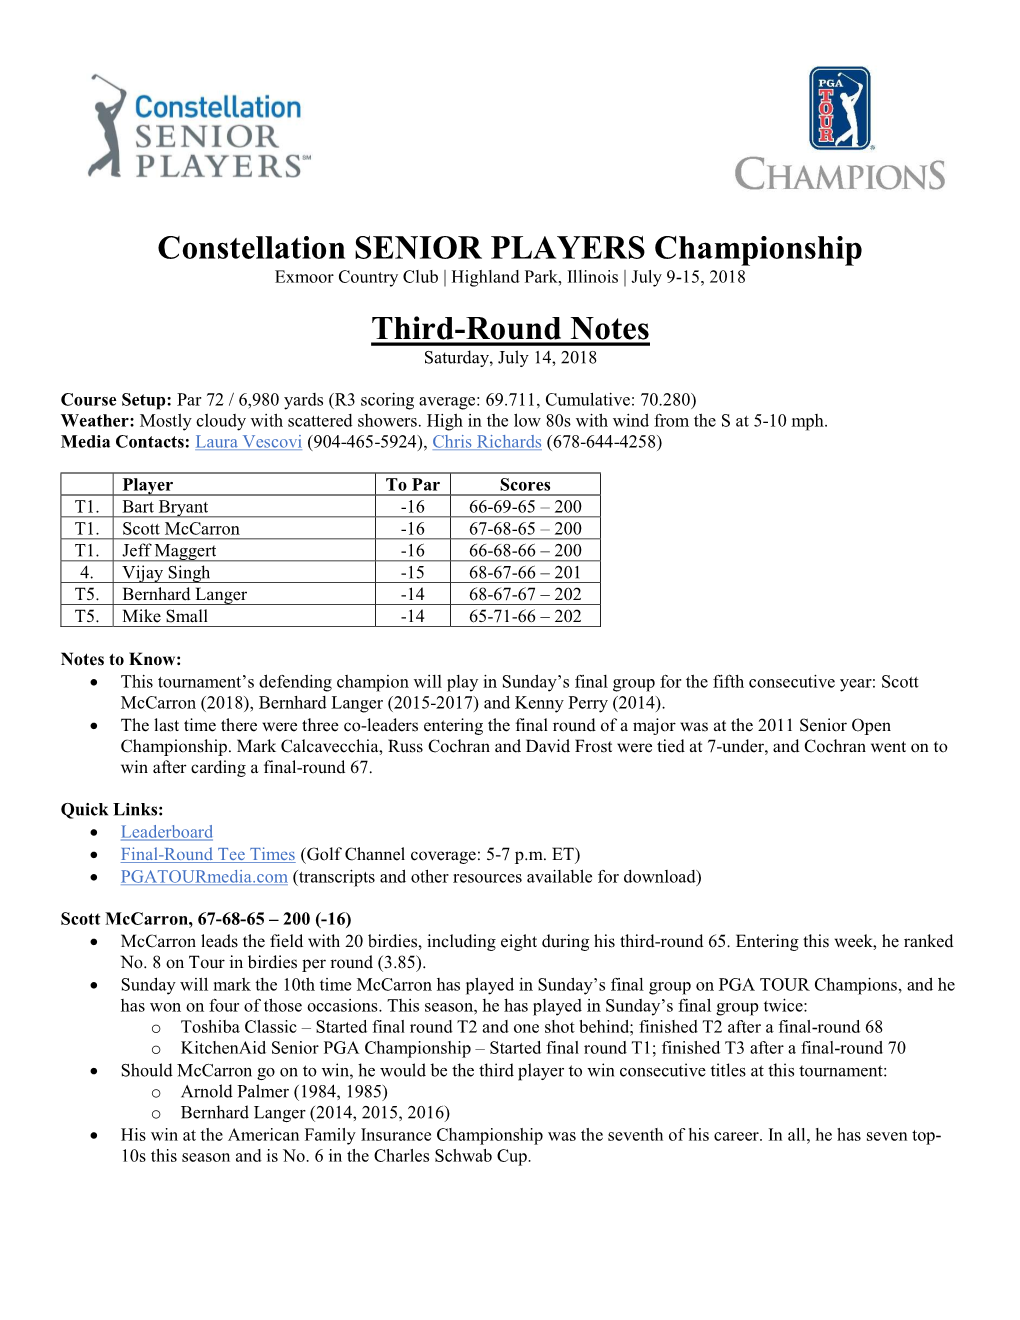 Constellation SENIOR PLAYERS Championship Third-Round Notes